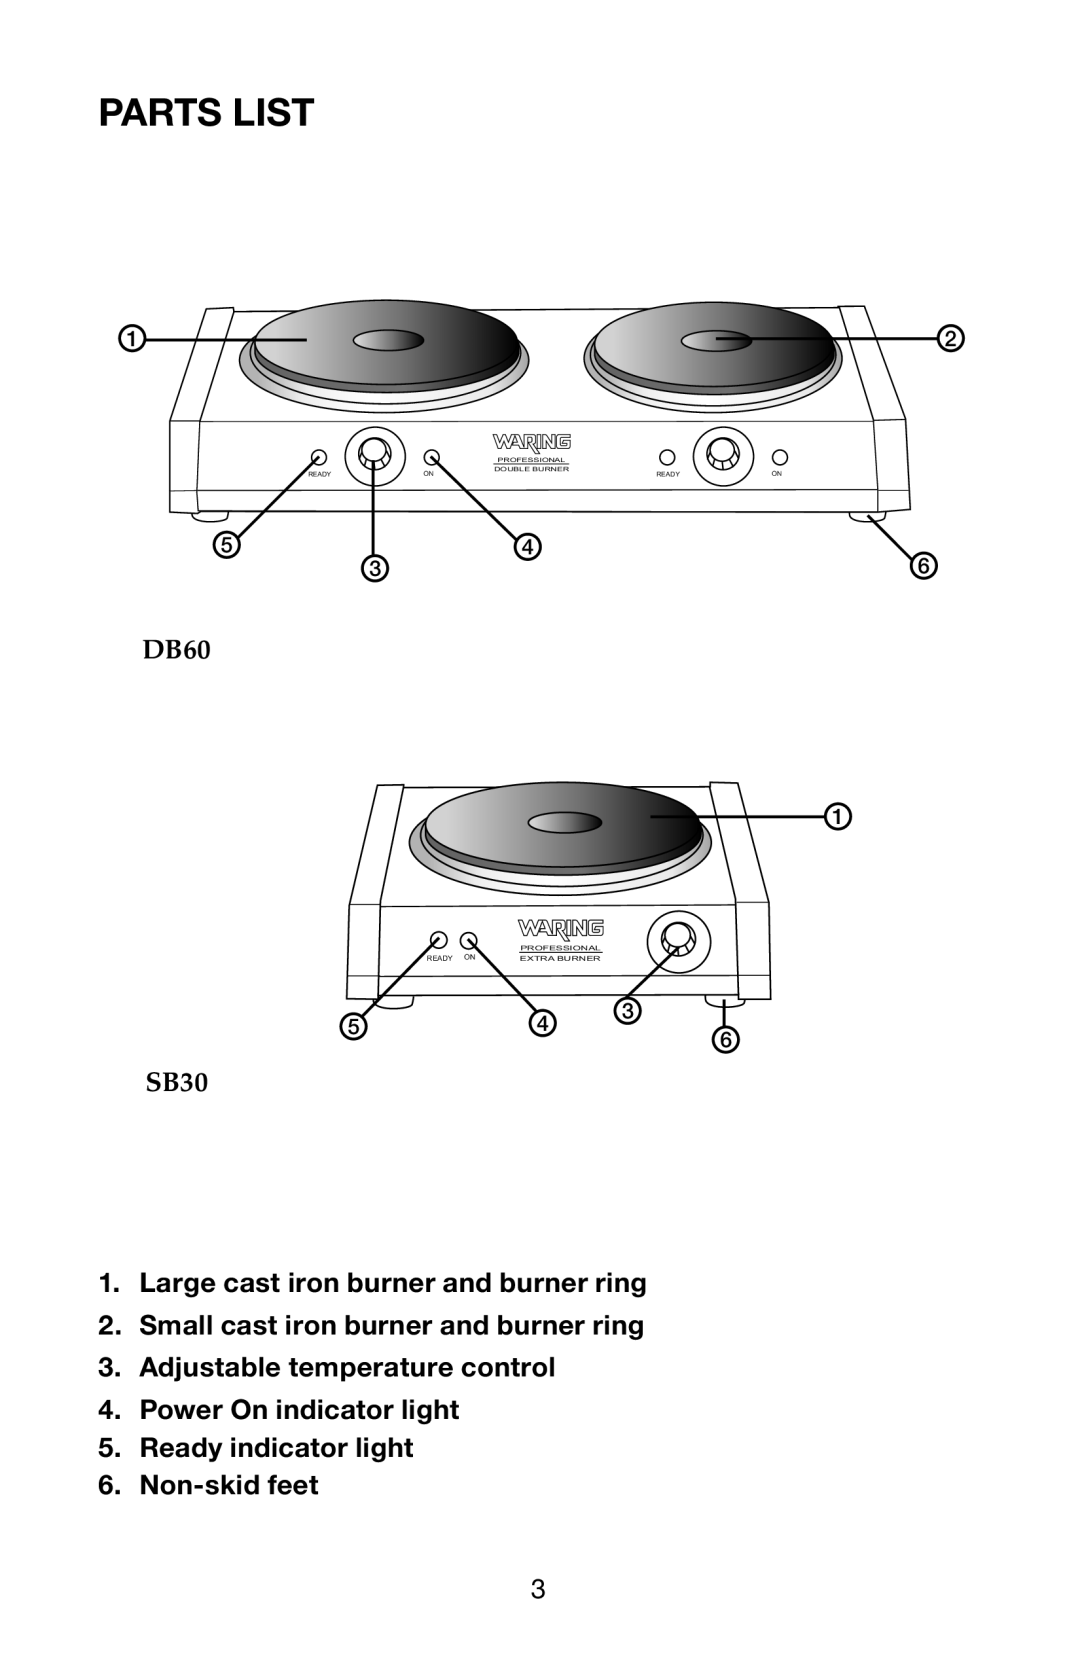 Waring SB30 manual Parts List, Large cast iron burner and burner ring, Small cast iron burner and burner ring, DB60 